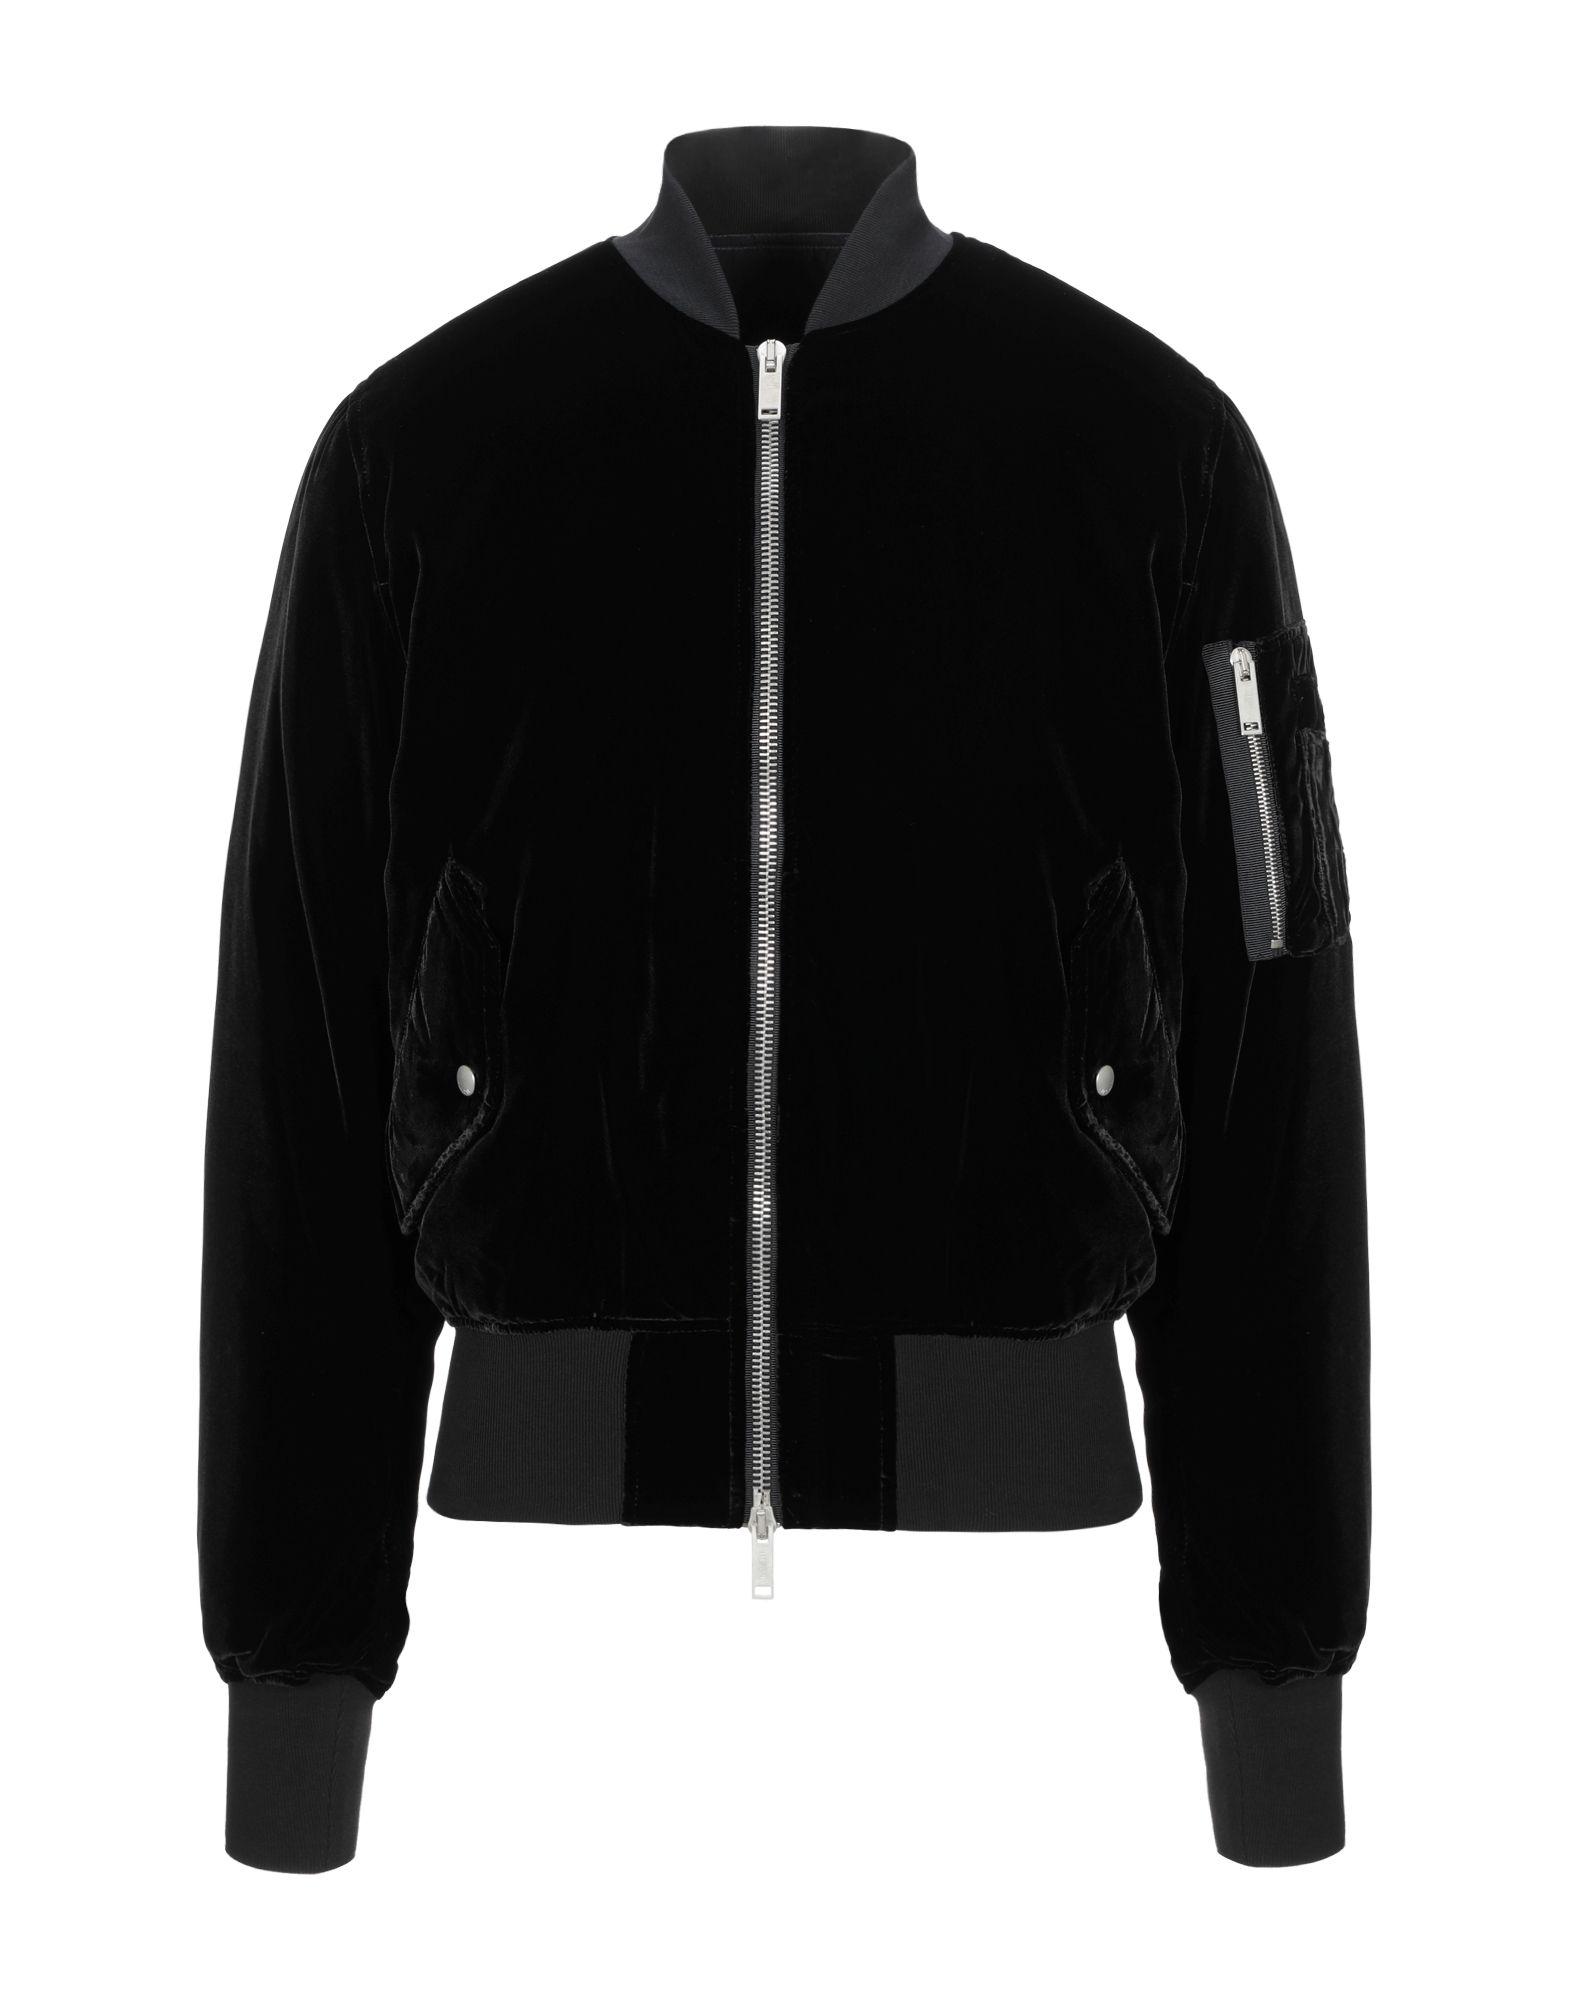 Unravel Project Velvet Jacket in Black for Men - Lyst